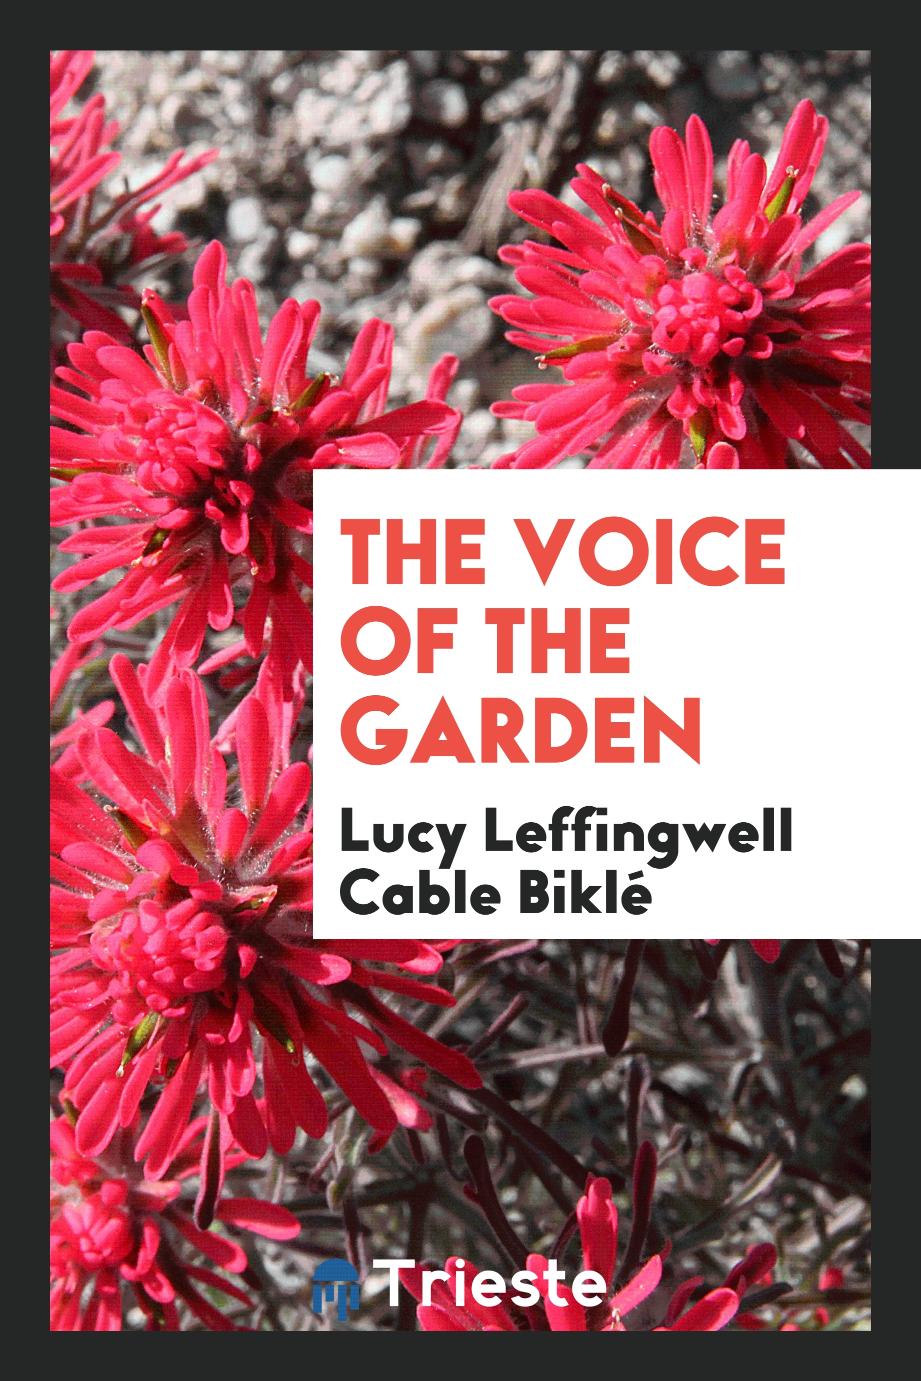 The voice of the garden